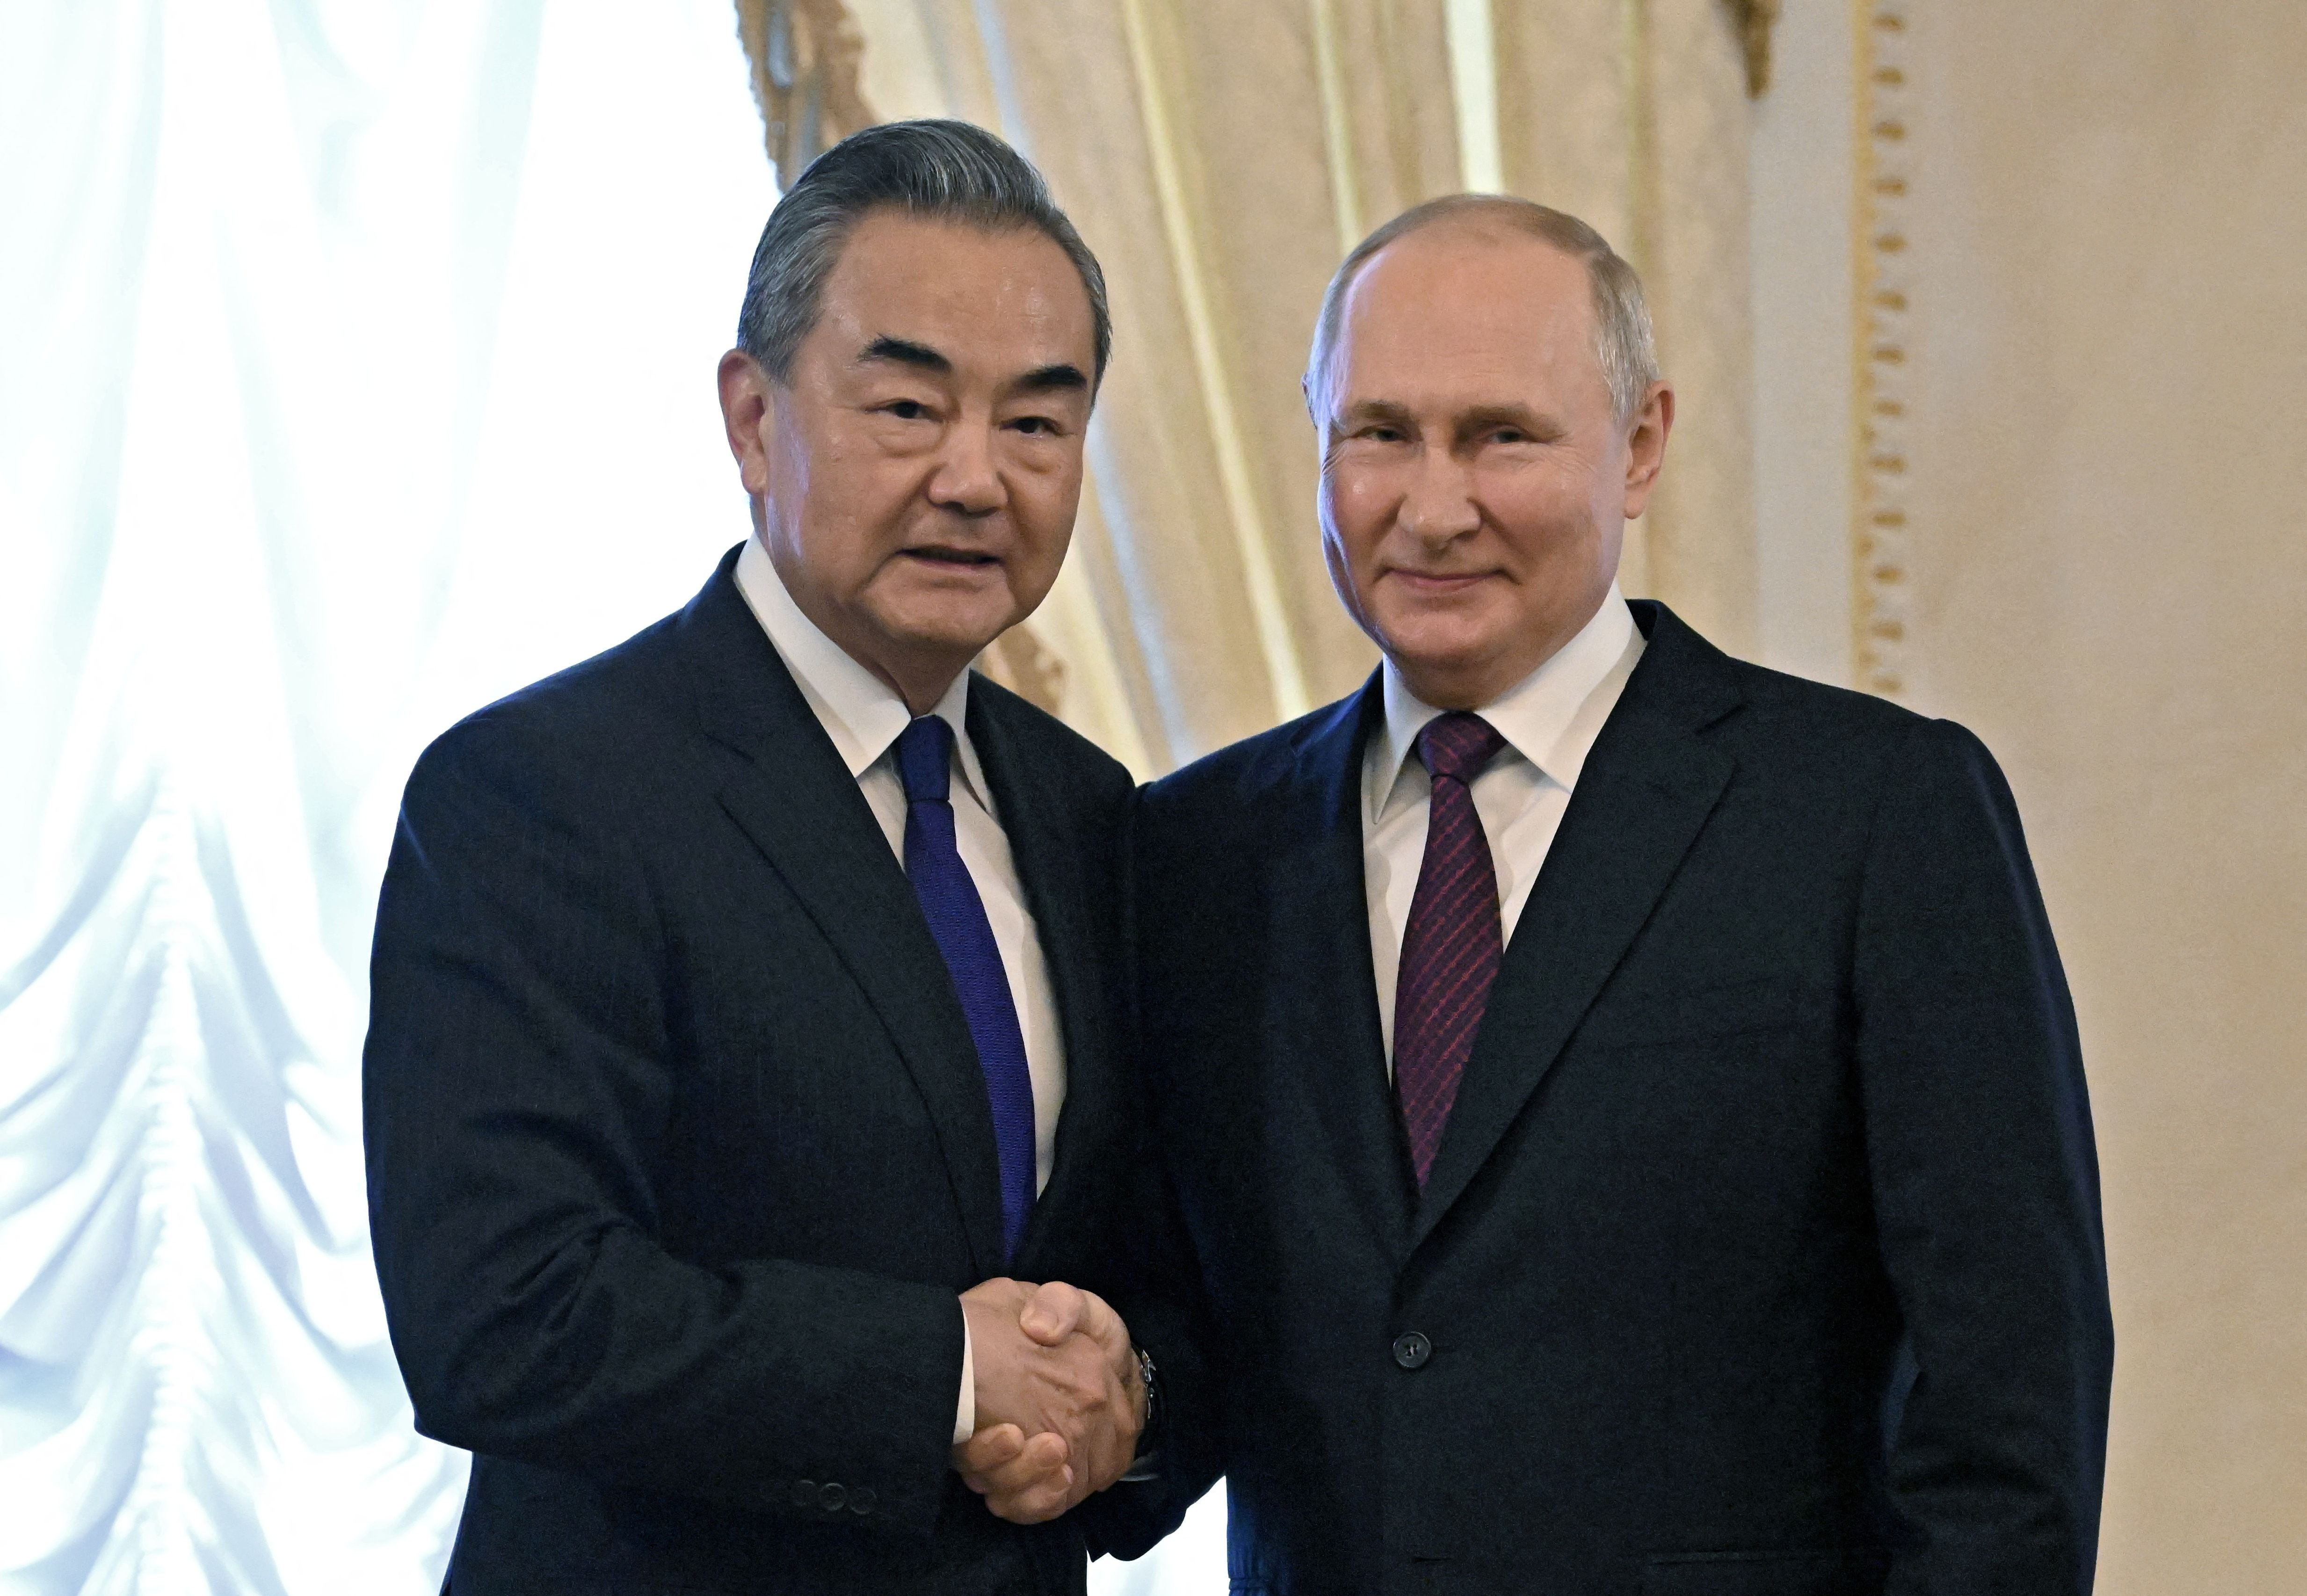 El presidente ruso Vladimir Putin junto al canciller chino Wang Yi (Sputnik/Kristina Kormilitsyna/REUTERS)